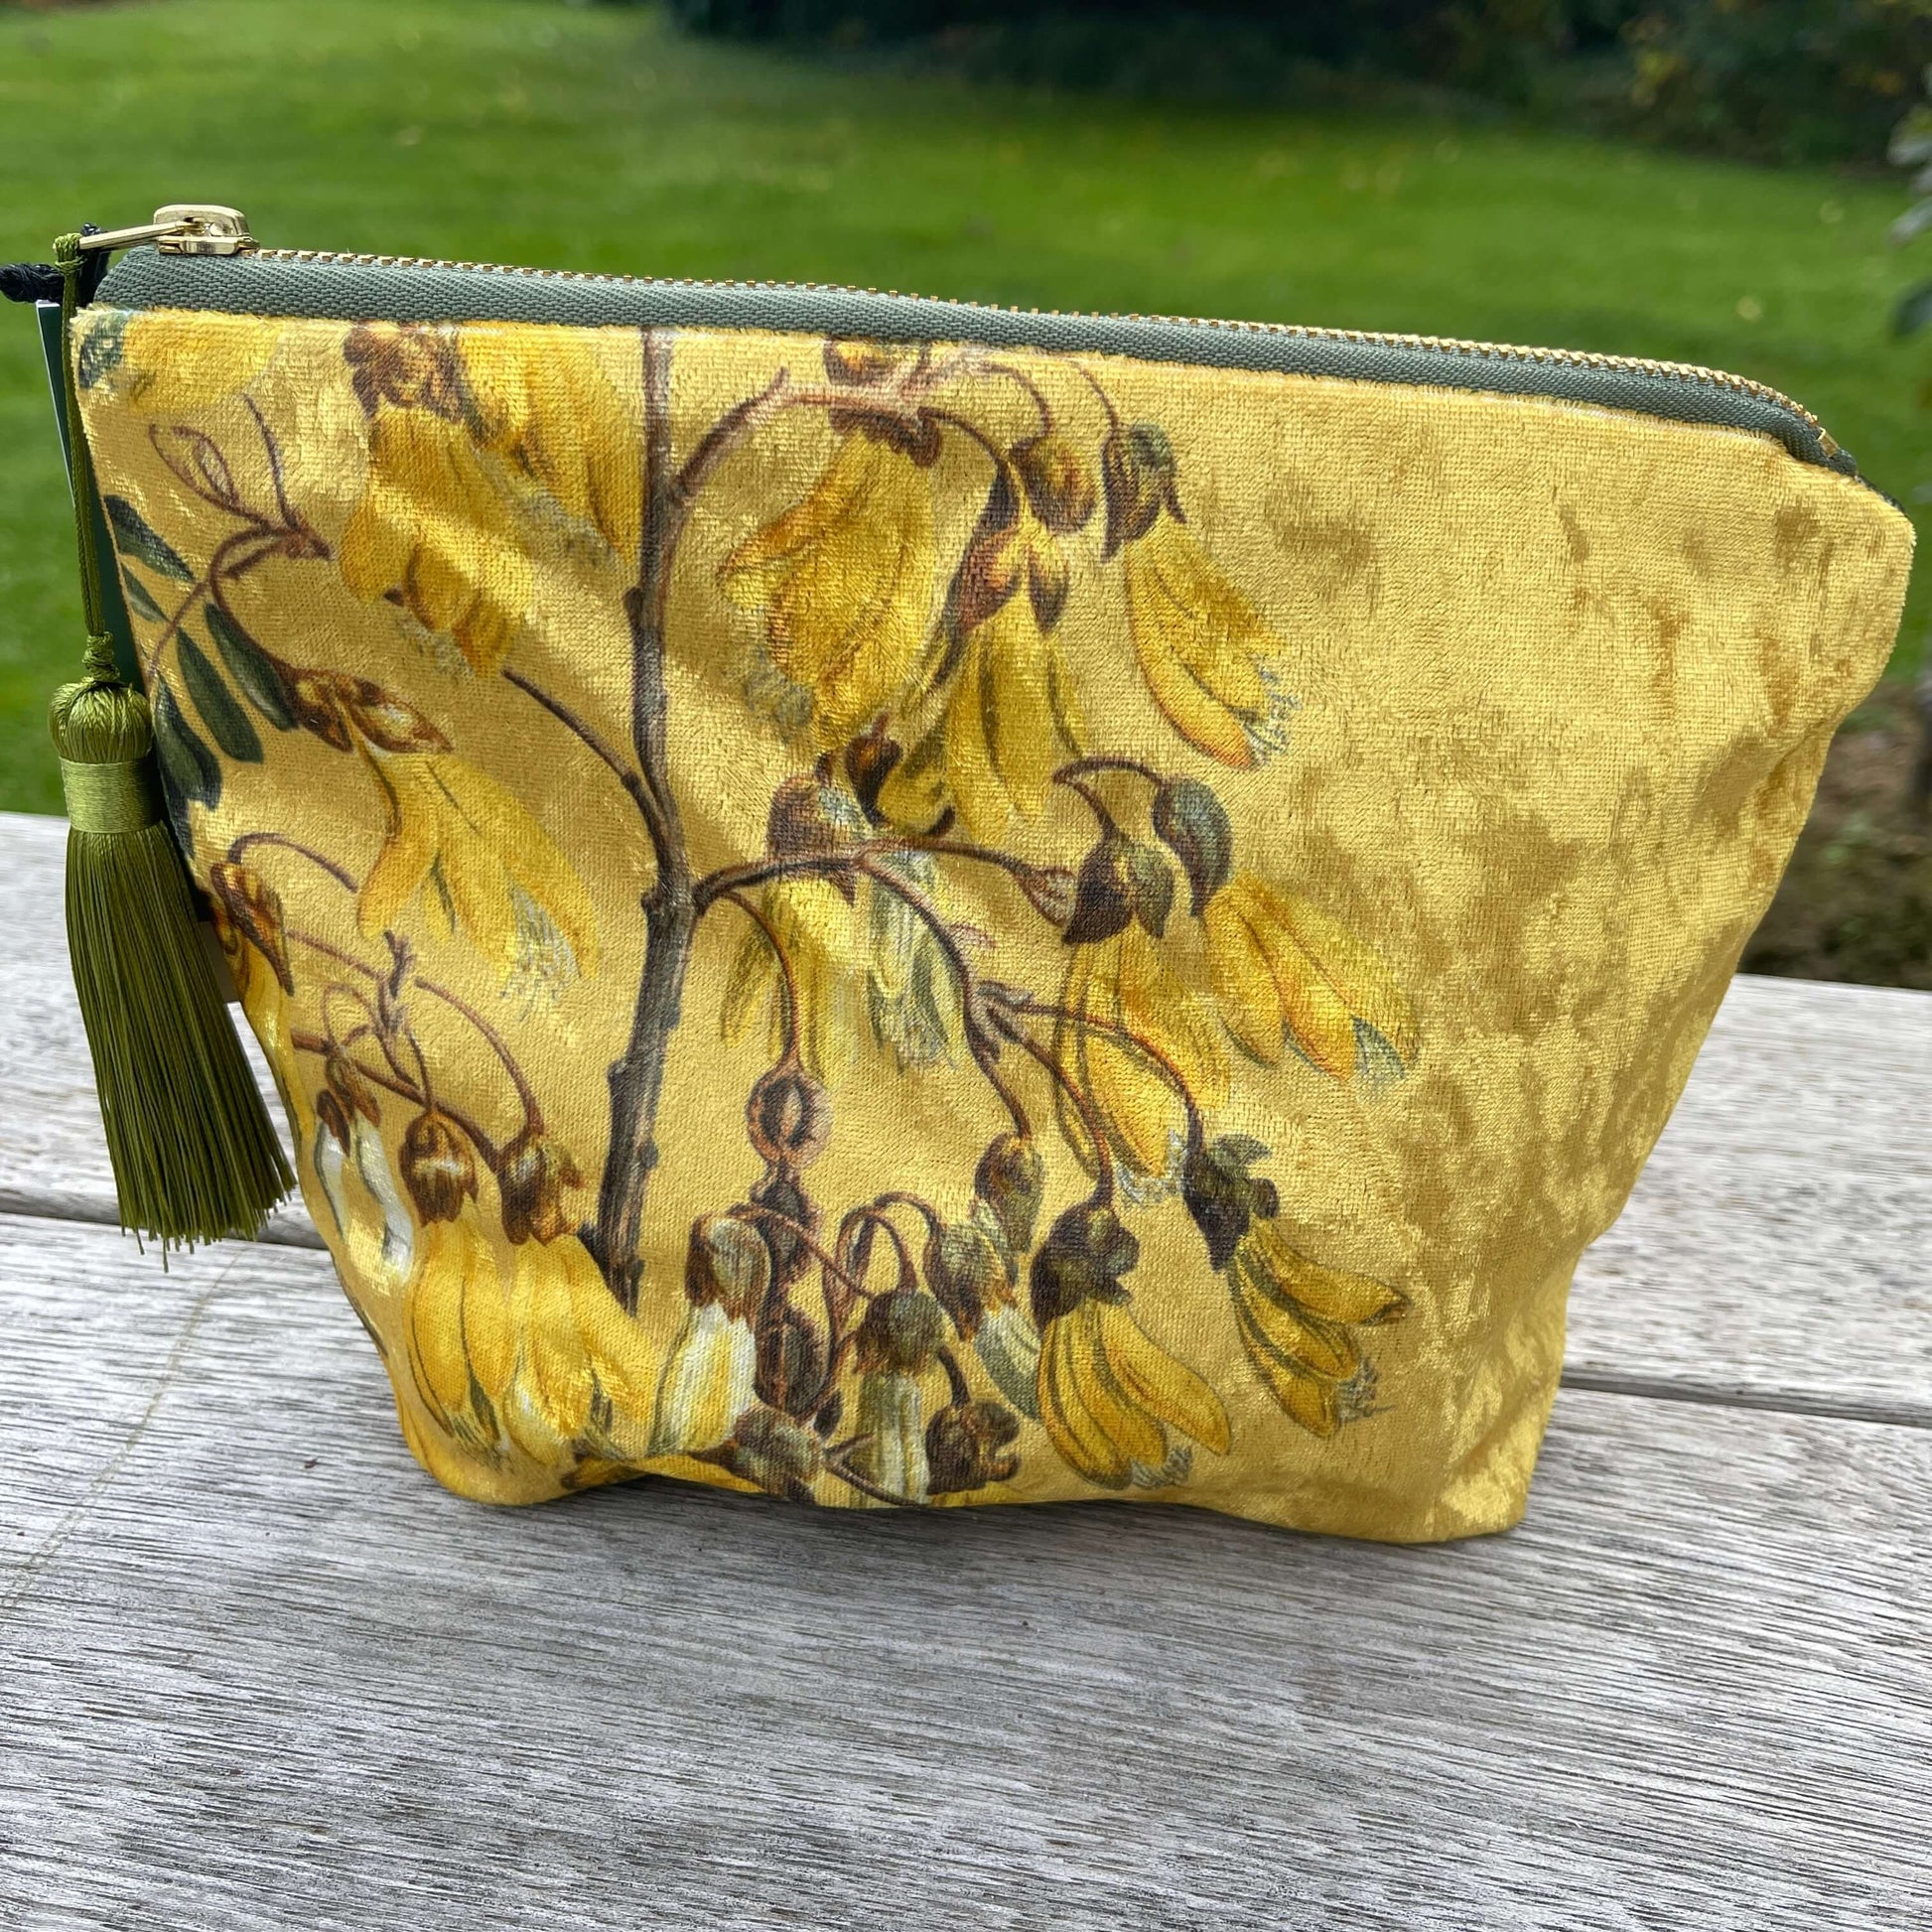 Golden velvet cosmetic bag with Kowhai flowers on it.